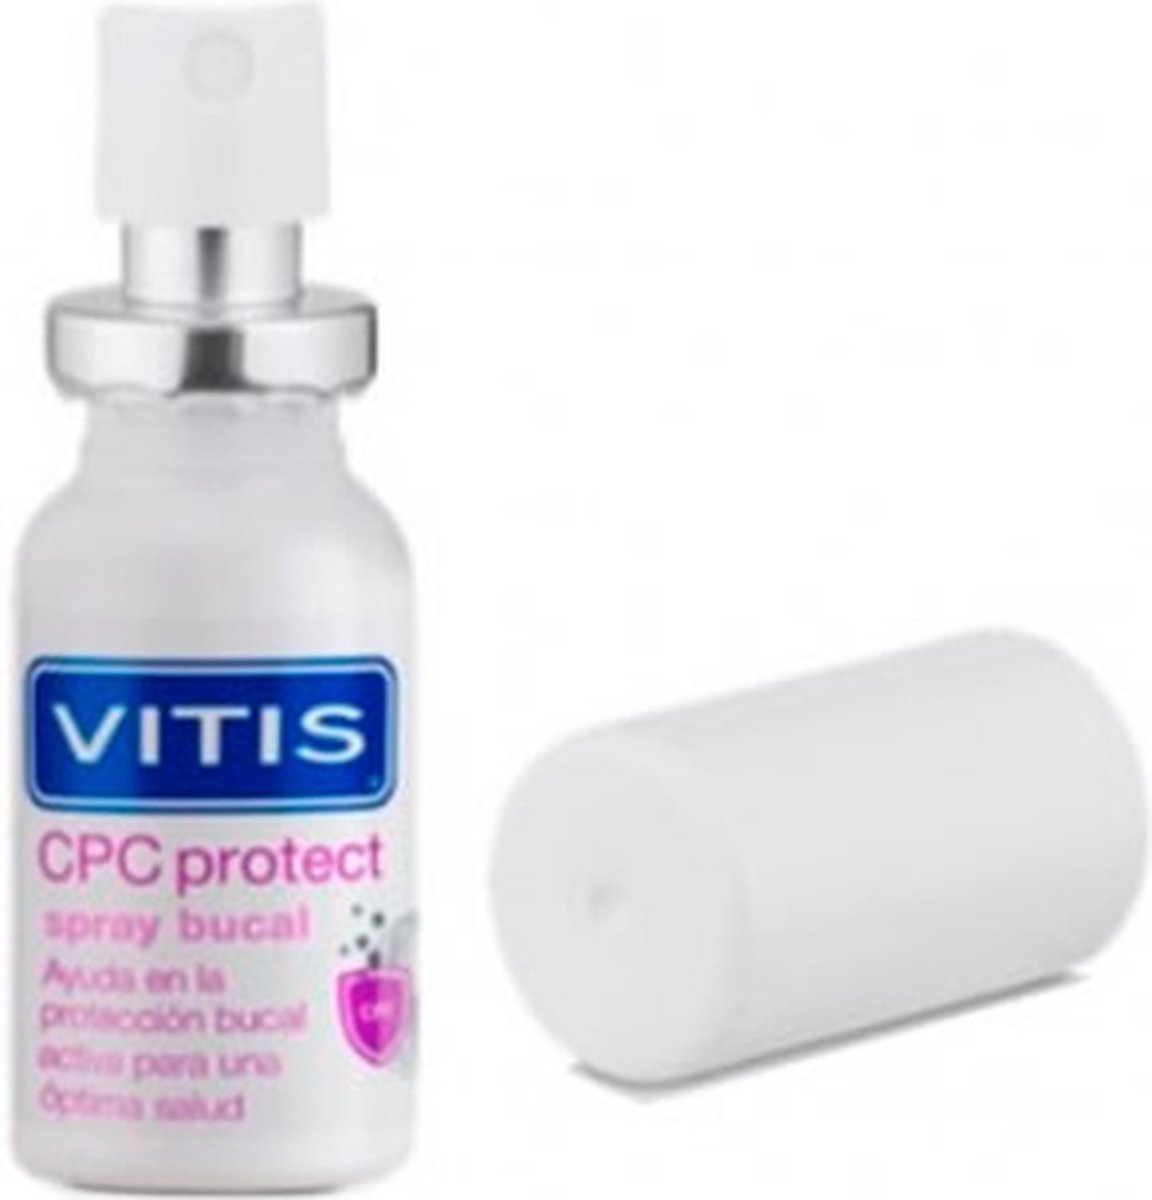 Vitis Cpc Protect Oral Spray 15ml